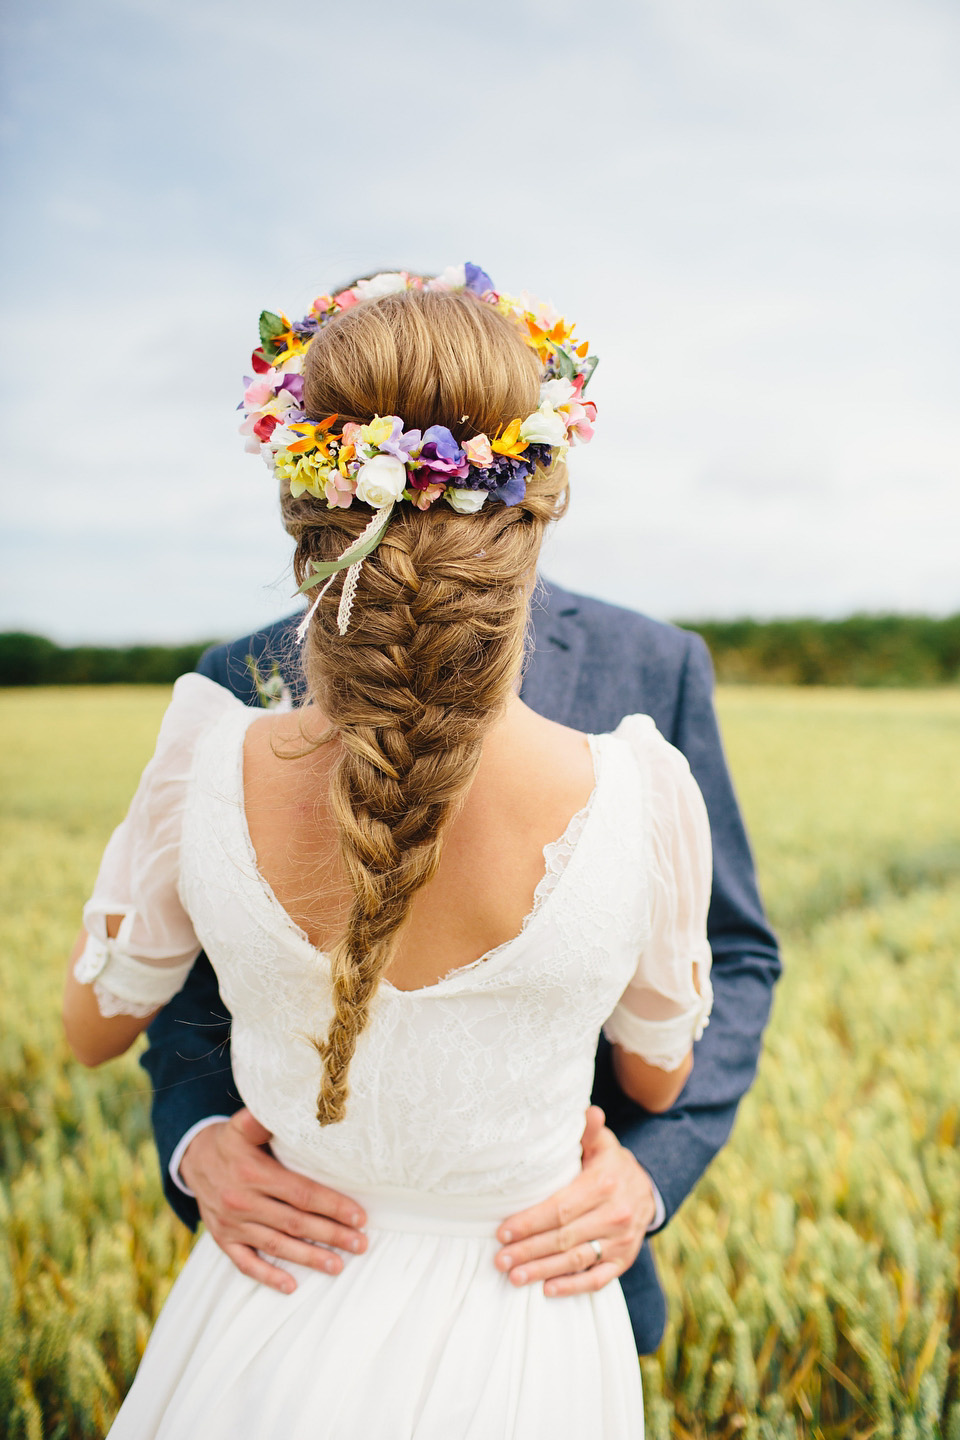 colourful weddings, floral crown, flower crown, whimsical wedding, dorset weddings, richard skins photography